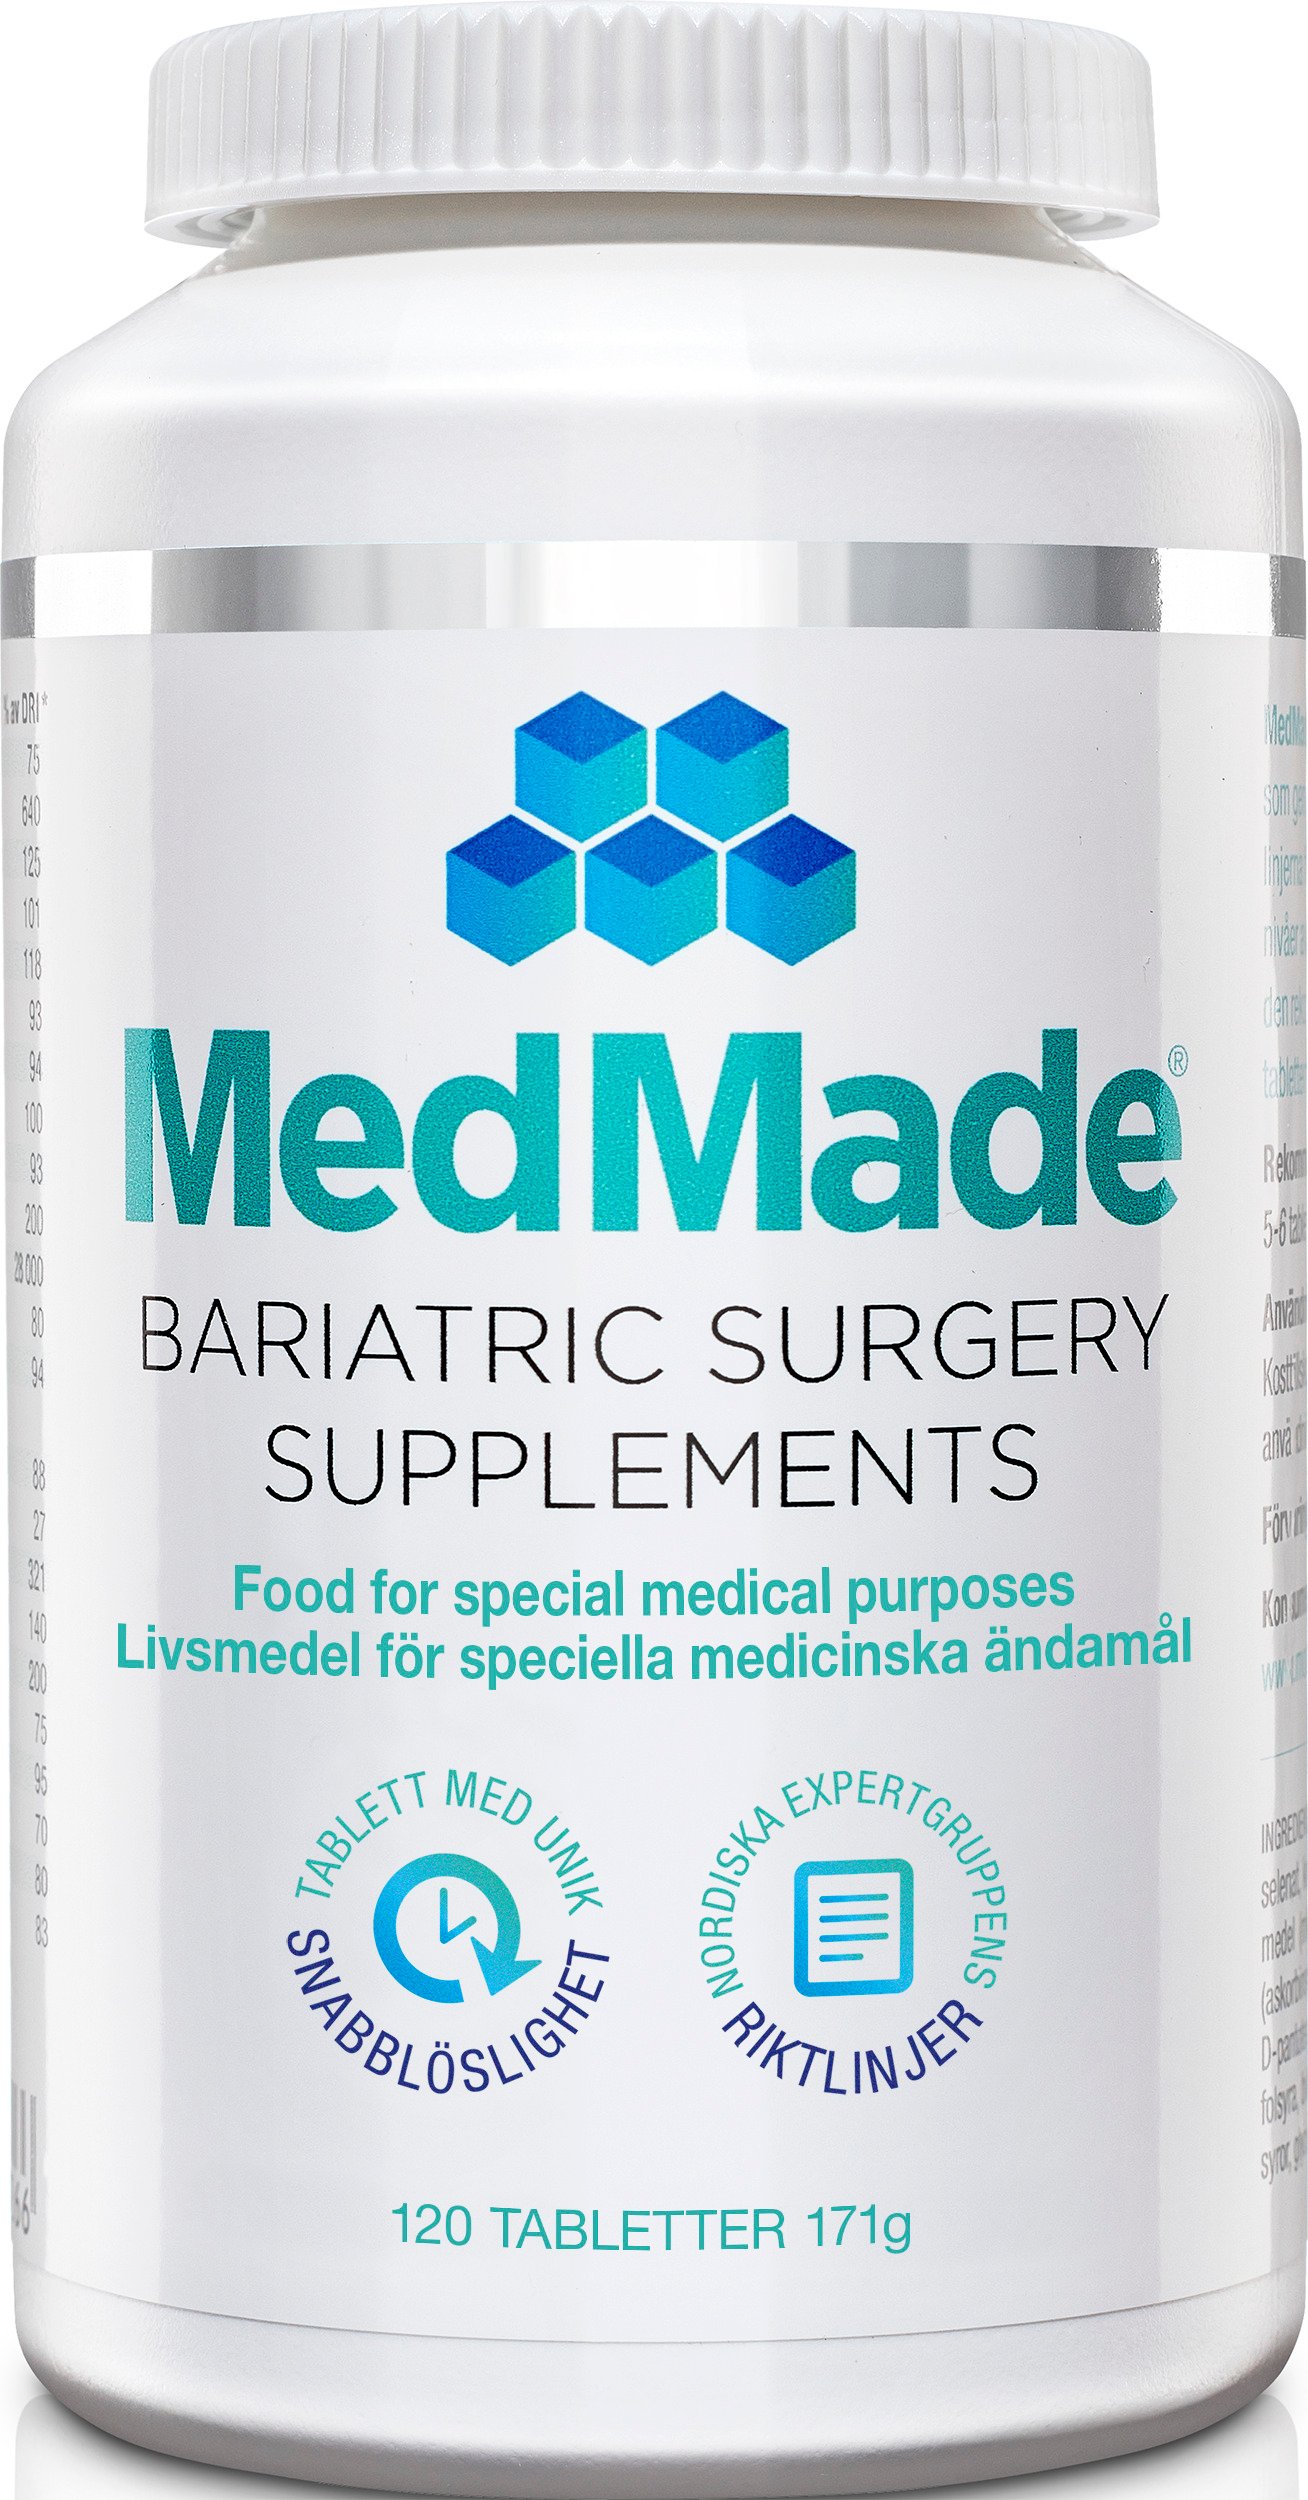 MedMade Bariatric Surgery Supplement 120 st